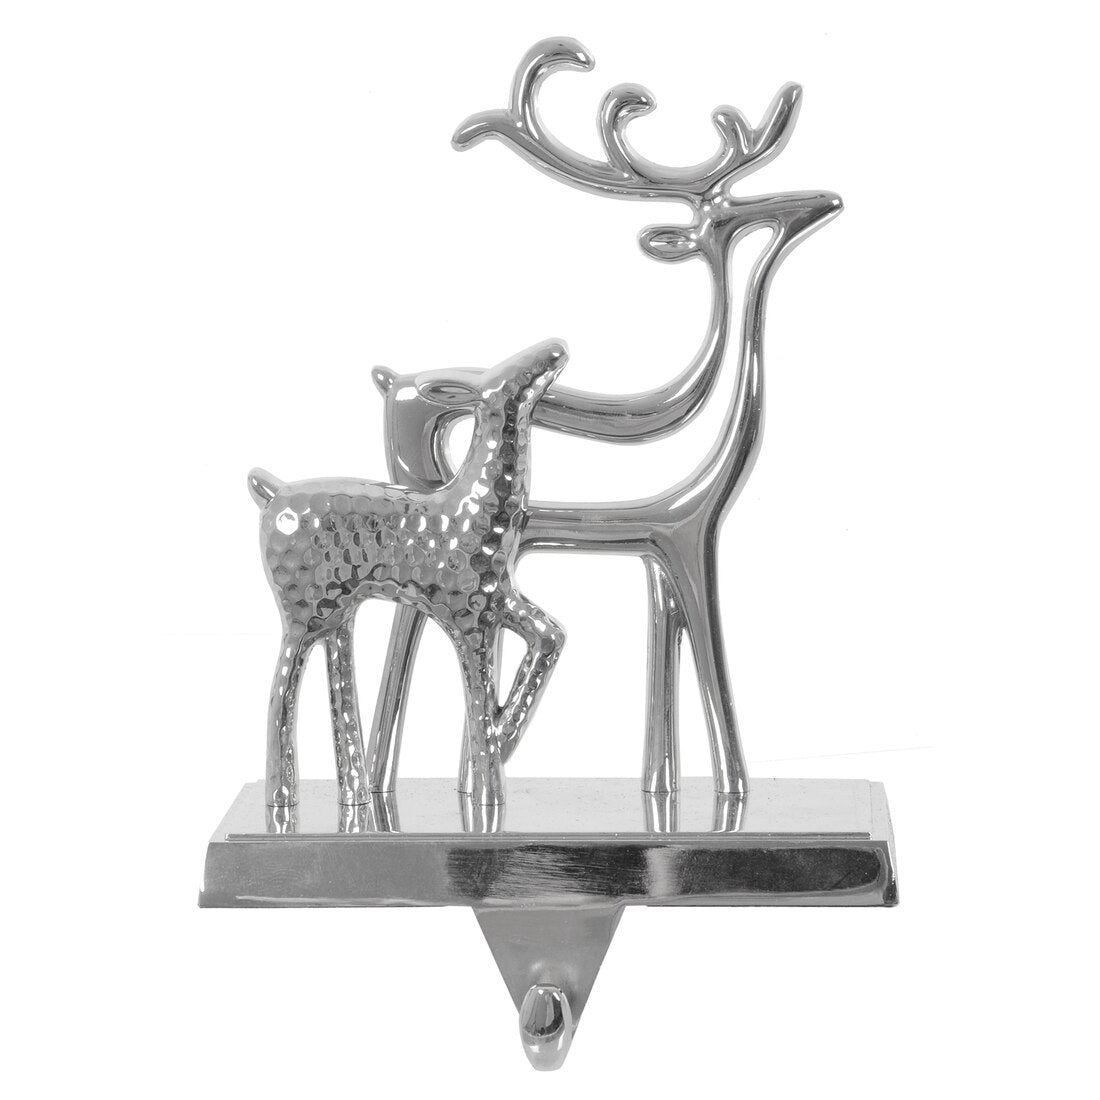 Mr Crimbo Silver Christmas Stocking Hanger Mantel Decoration - MrCrimbo.co.uk -XS6484 - Double Reindeer -hanger